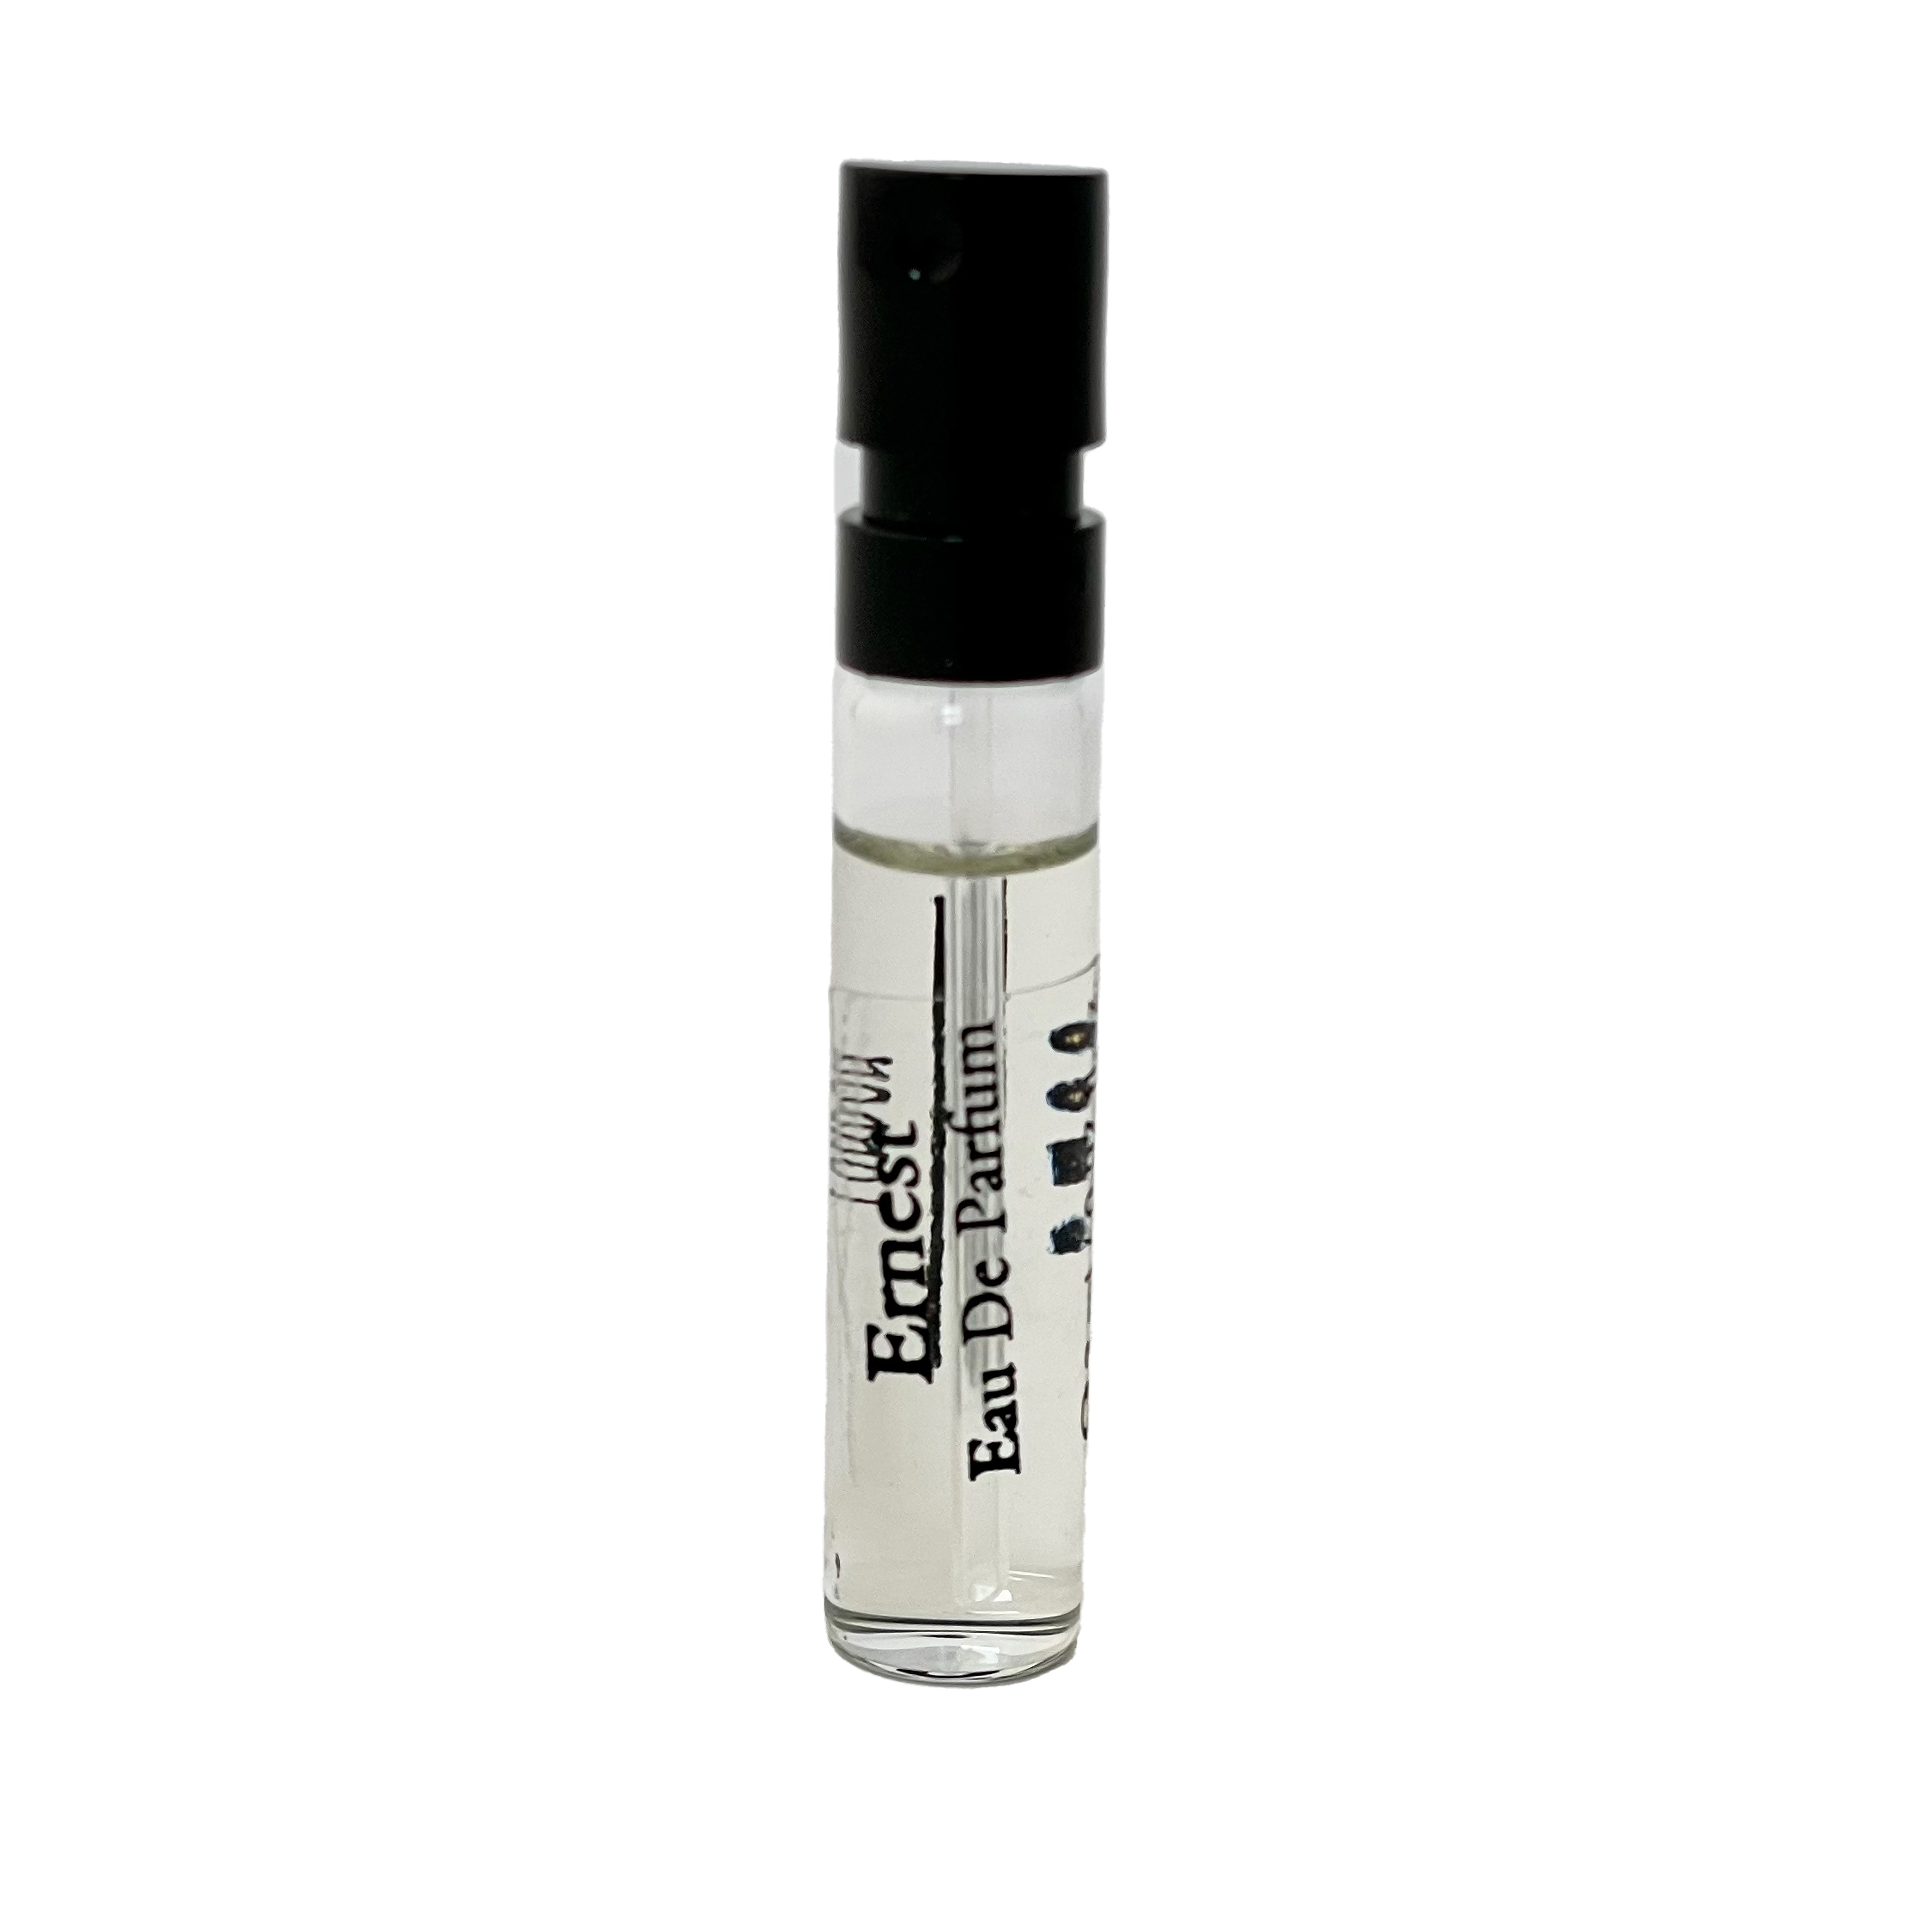 Ernest - 2ml Fragrance Sample